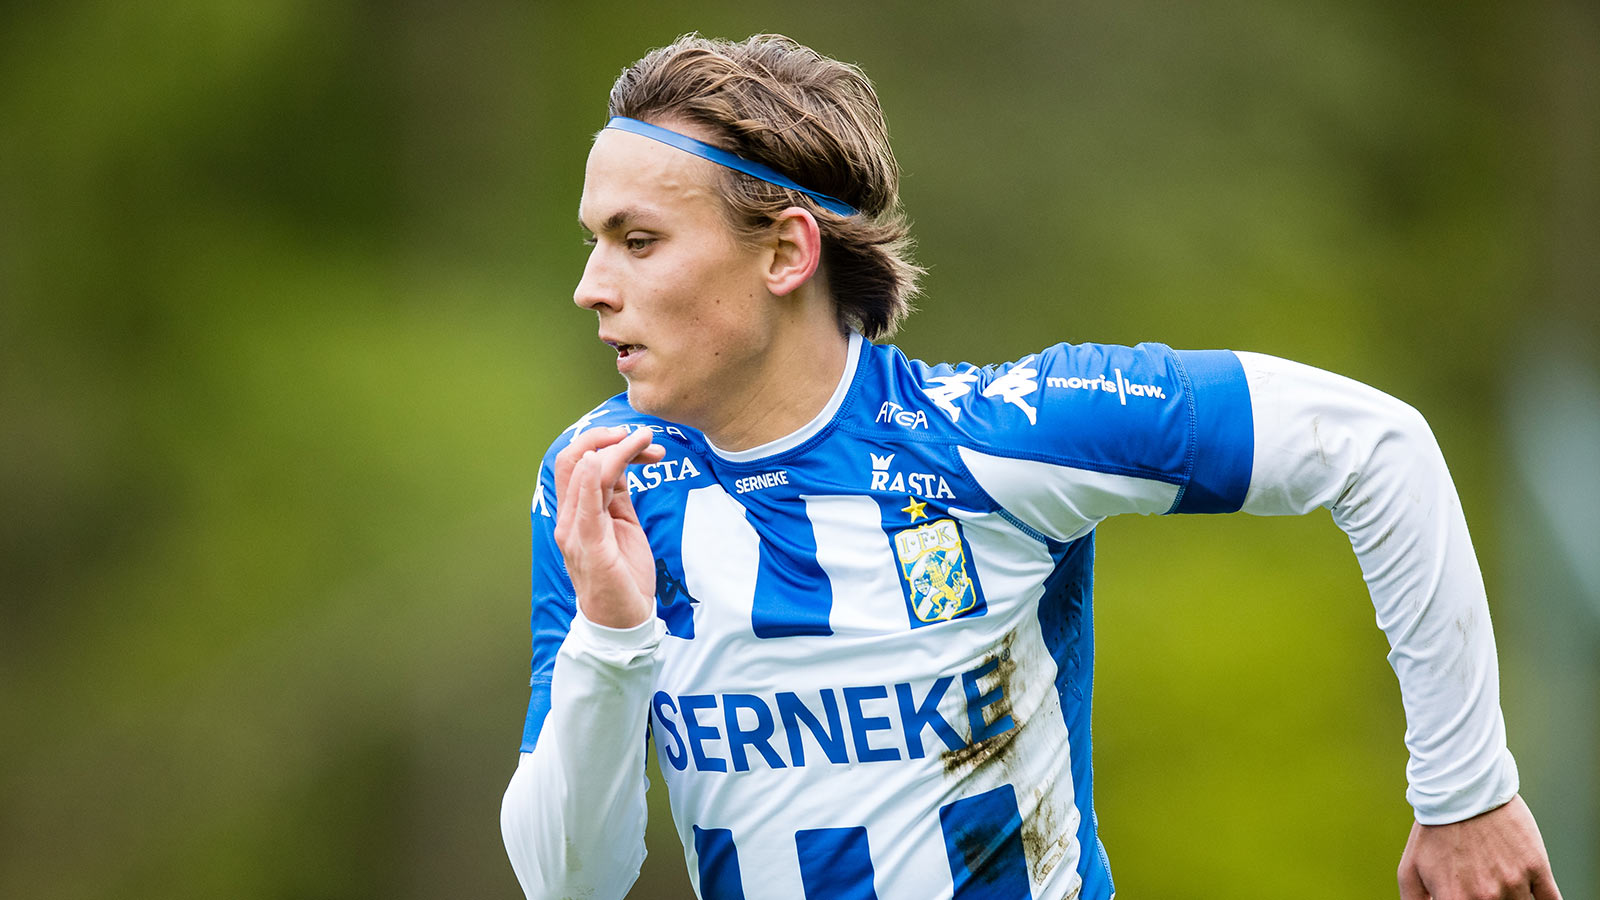 IFK Göteborg - officiell hemsida | Blåvitt, IFK Göteborg ...